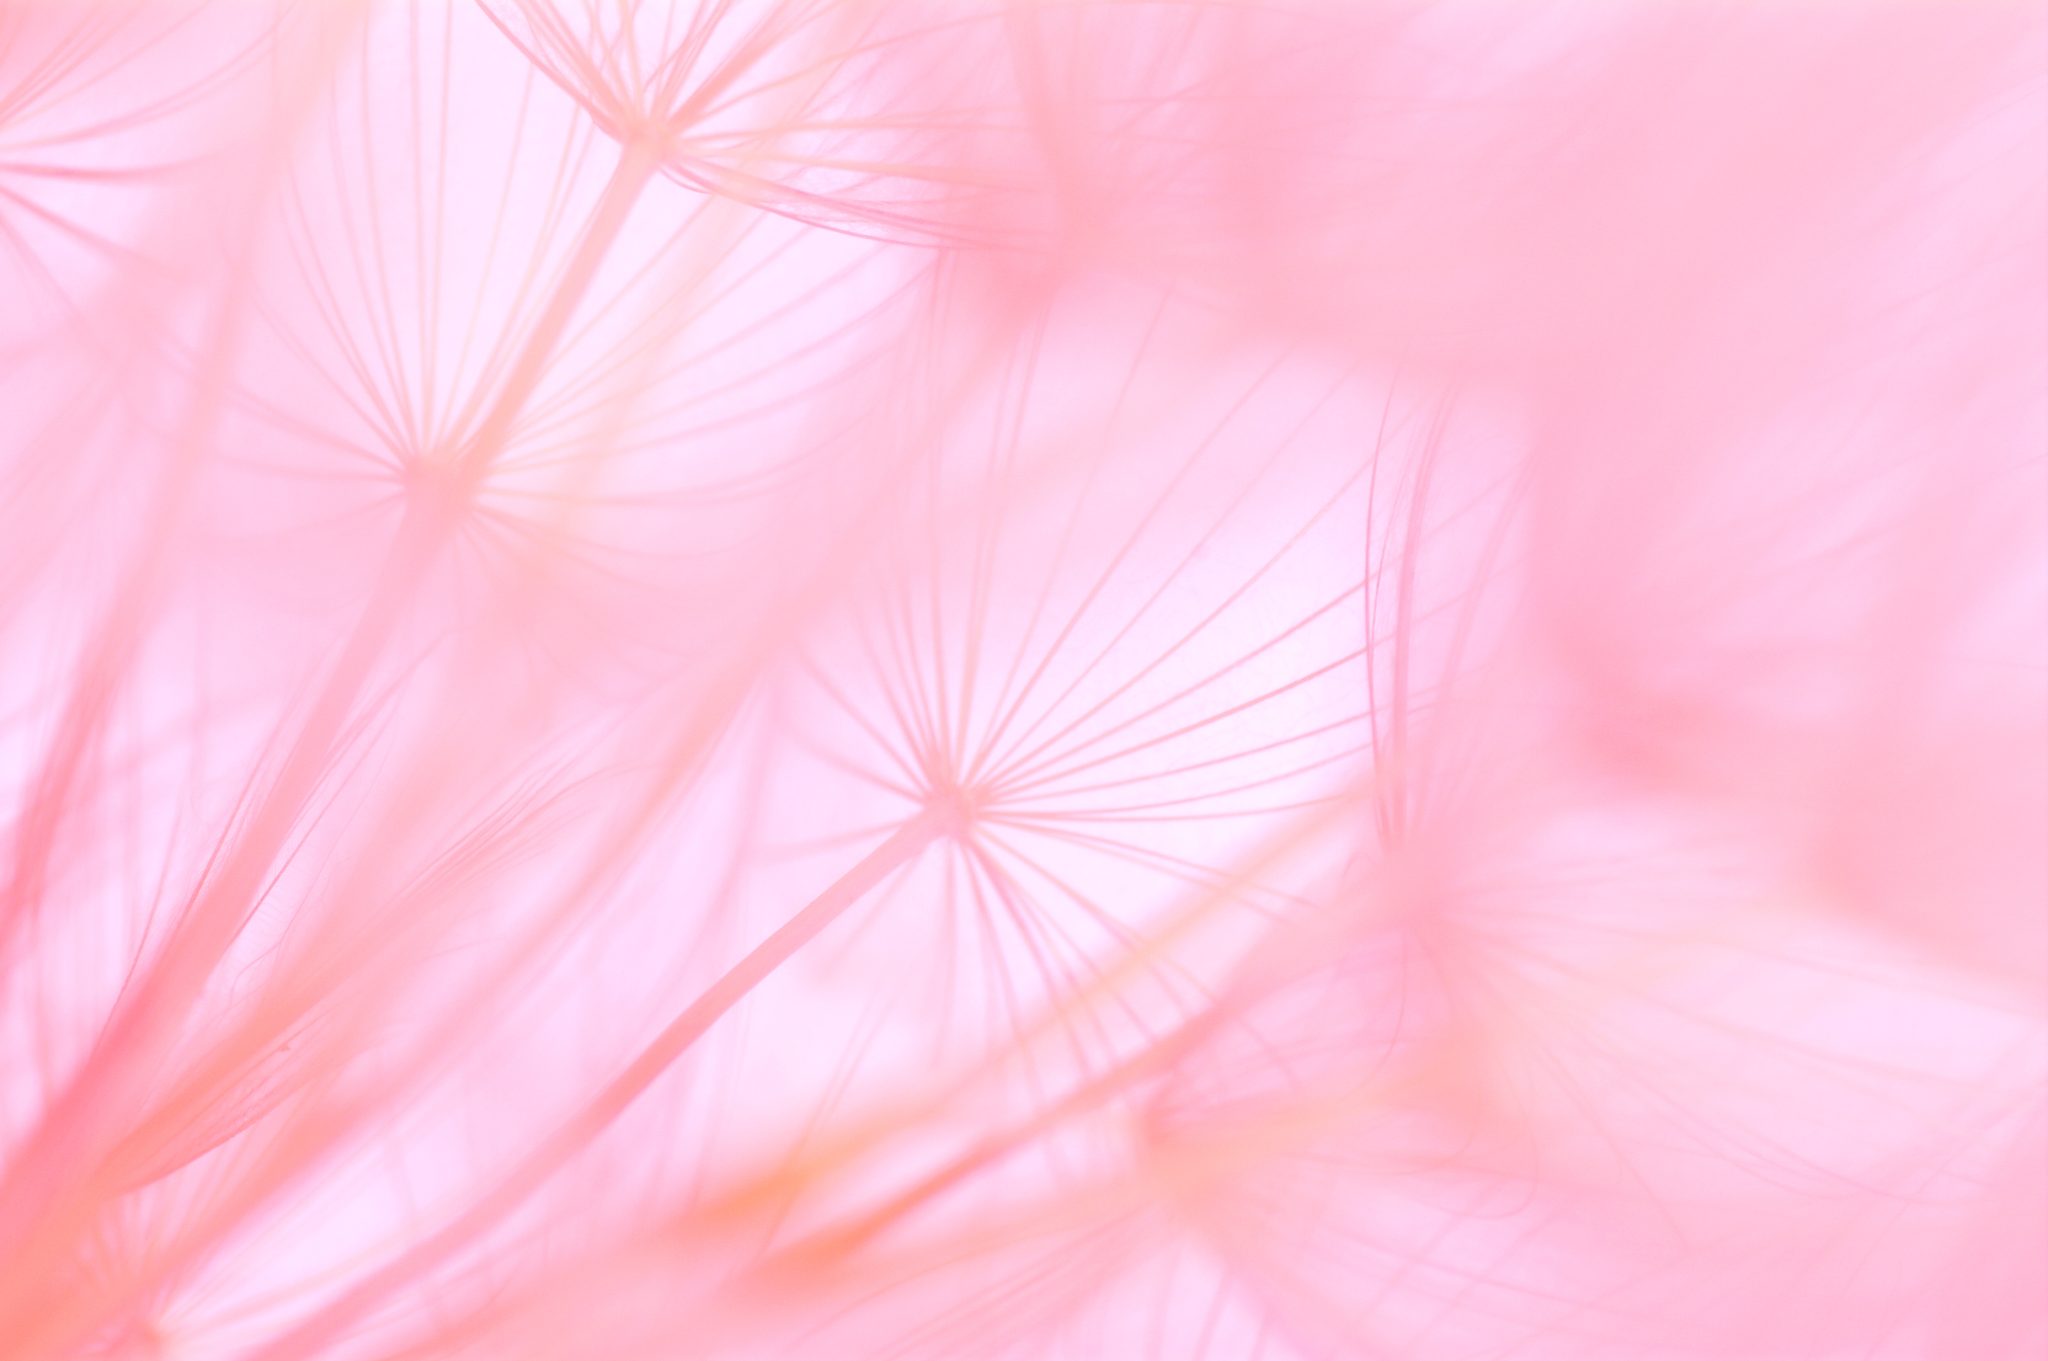 Macro shot of dandelion seed head in pink light